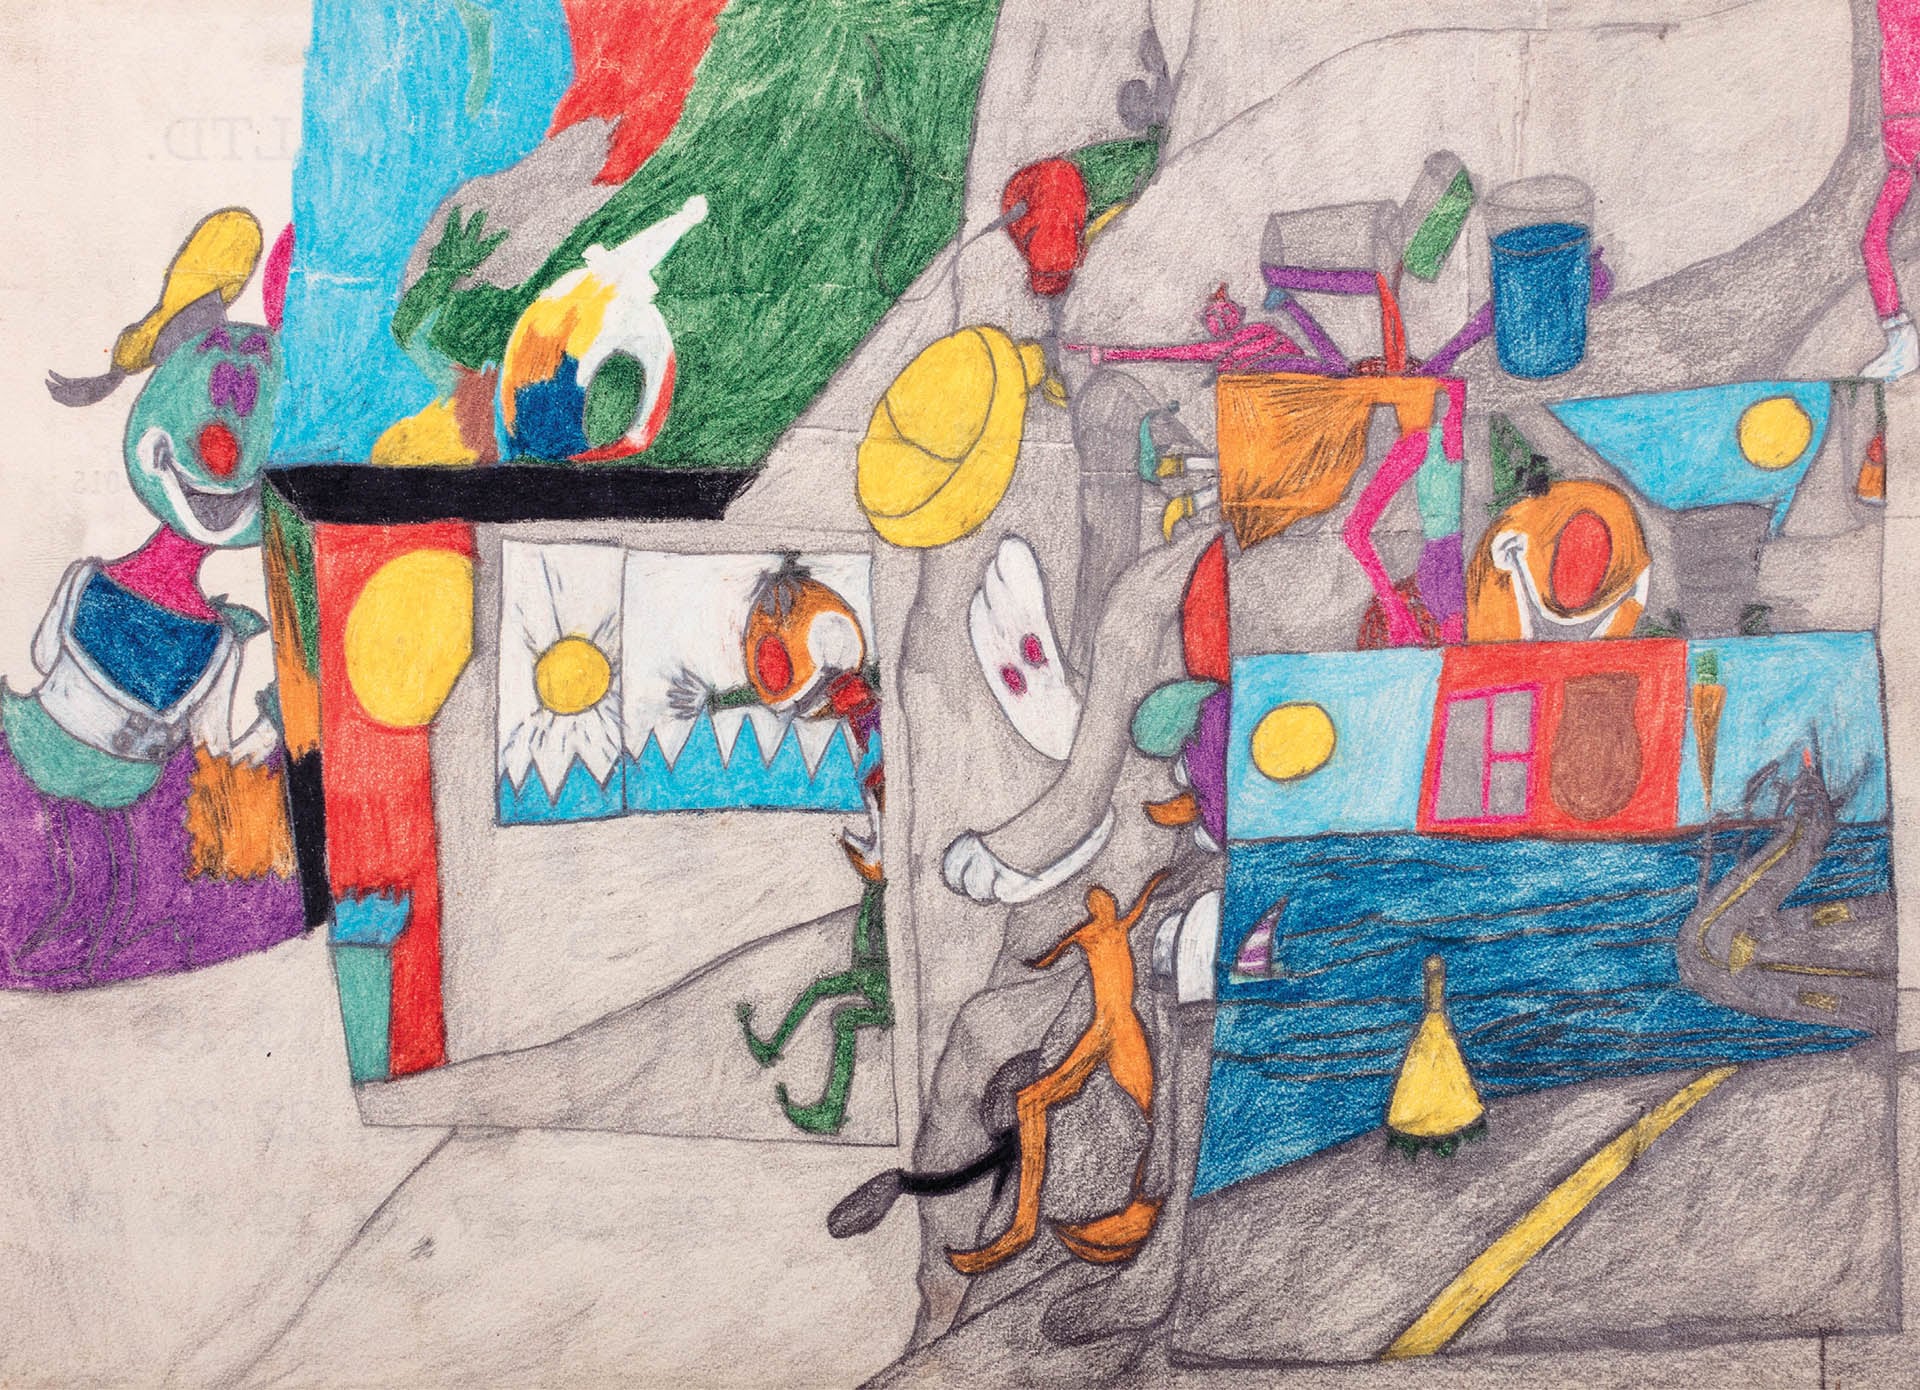 Susan Te Kahurangi King, <em>Untitled (D03108)</em> c. 1966–1967. Graphite and colored pencil on found paper. 19.5 × 28 cm. Courtesy the artist, Chris Byrne and Marlborough Contemporary.